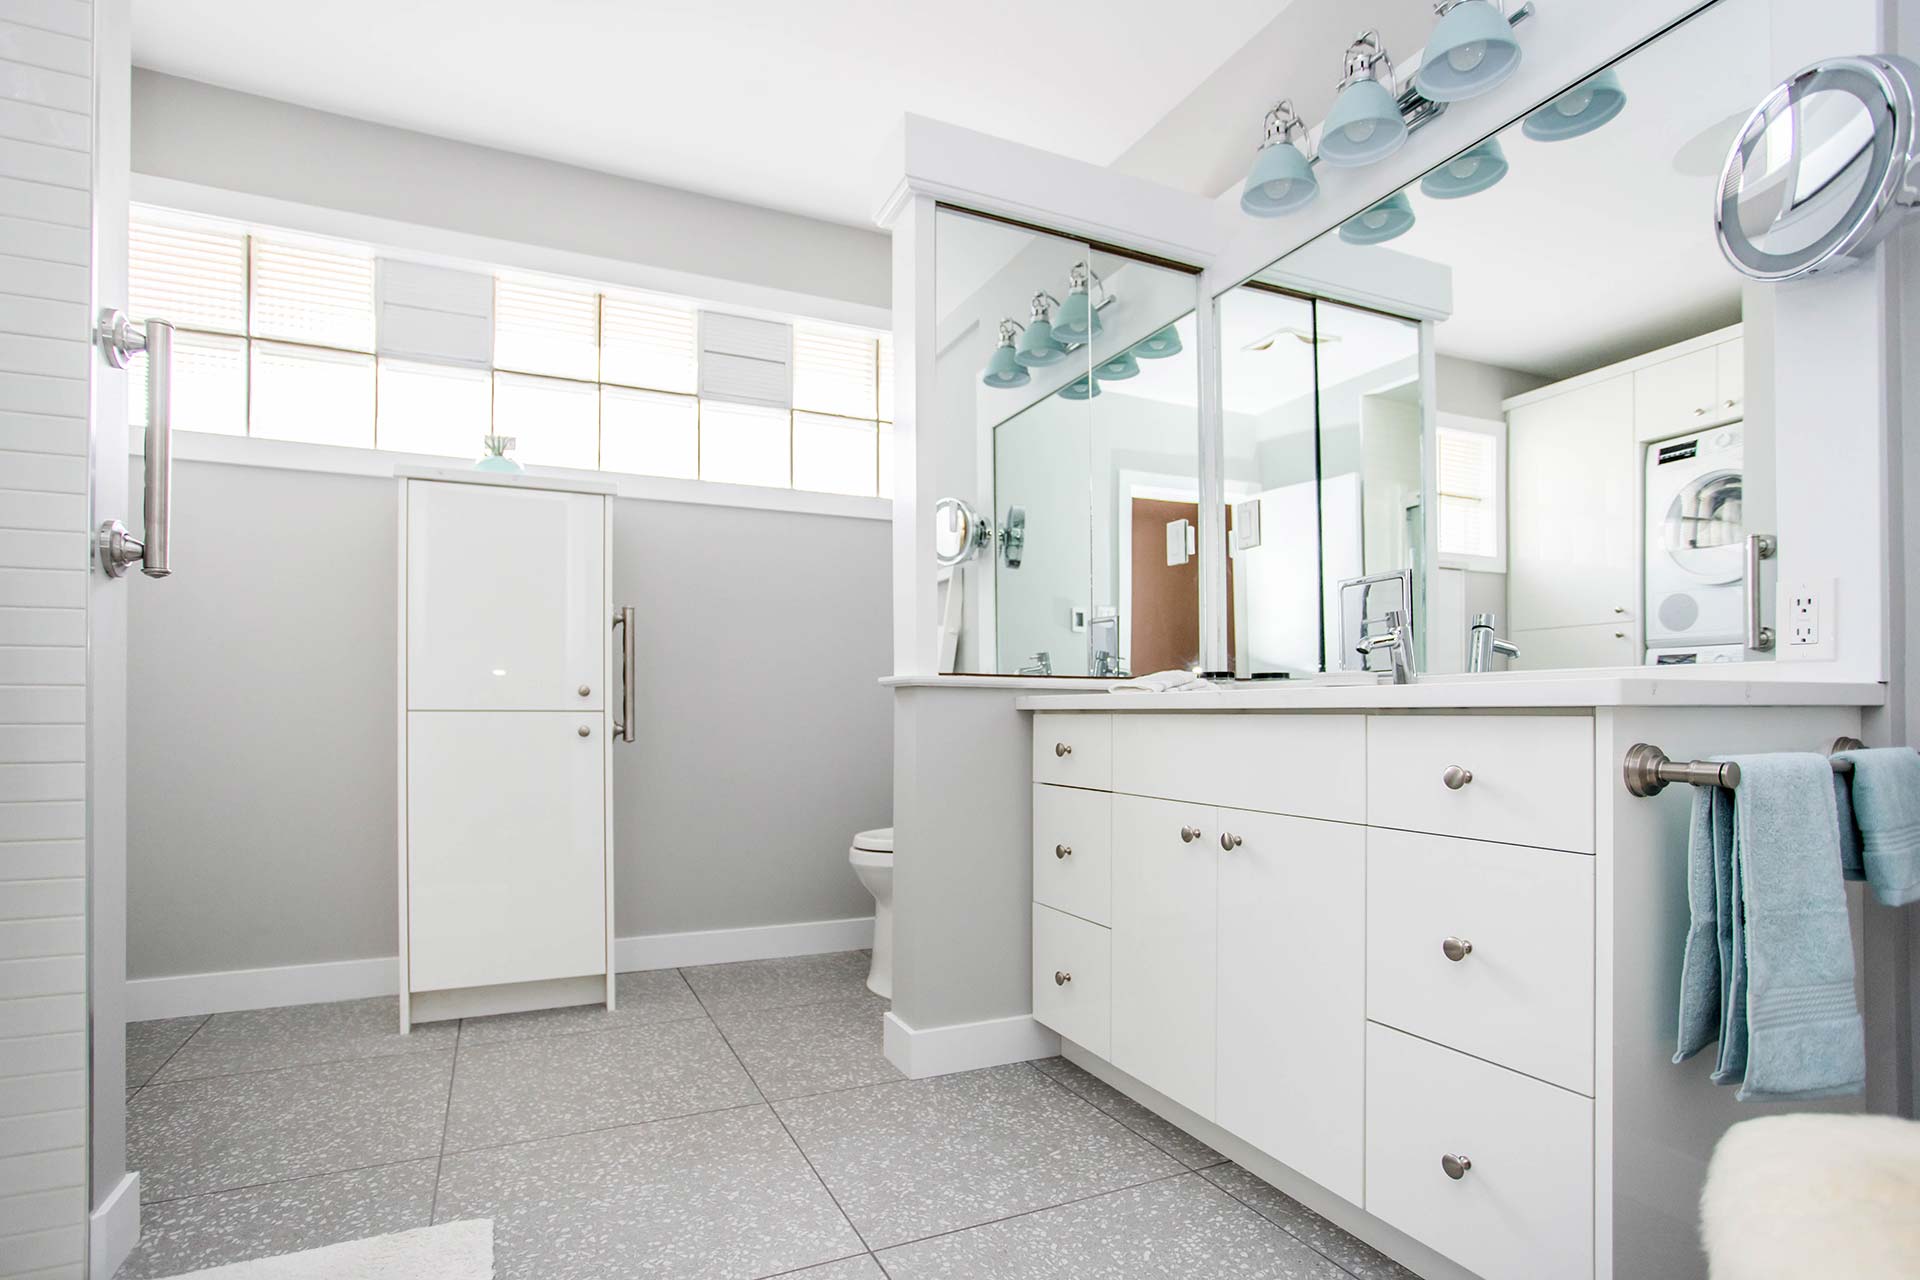 Belamour Homes - Rae St Renovation - Bathroom Vanity and Storage